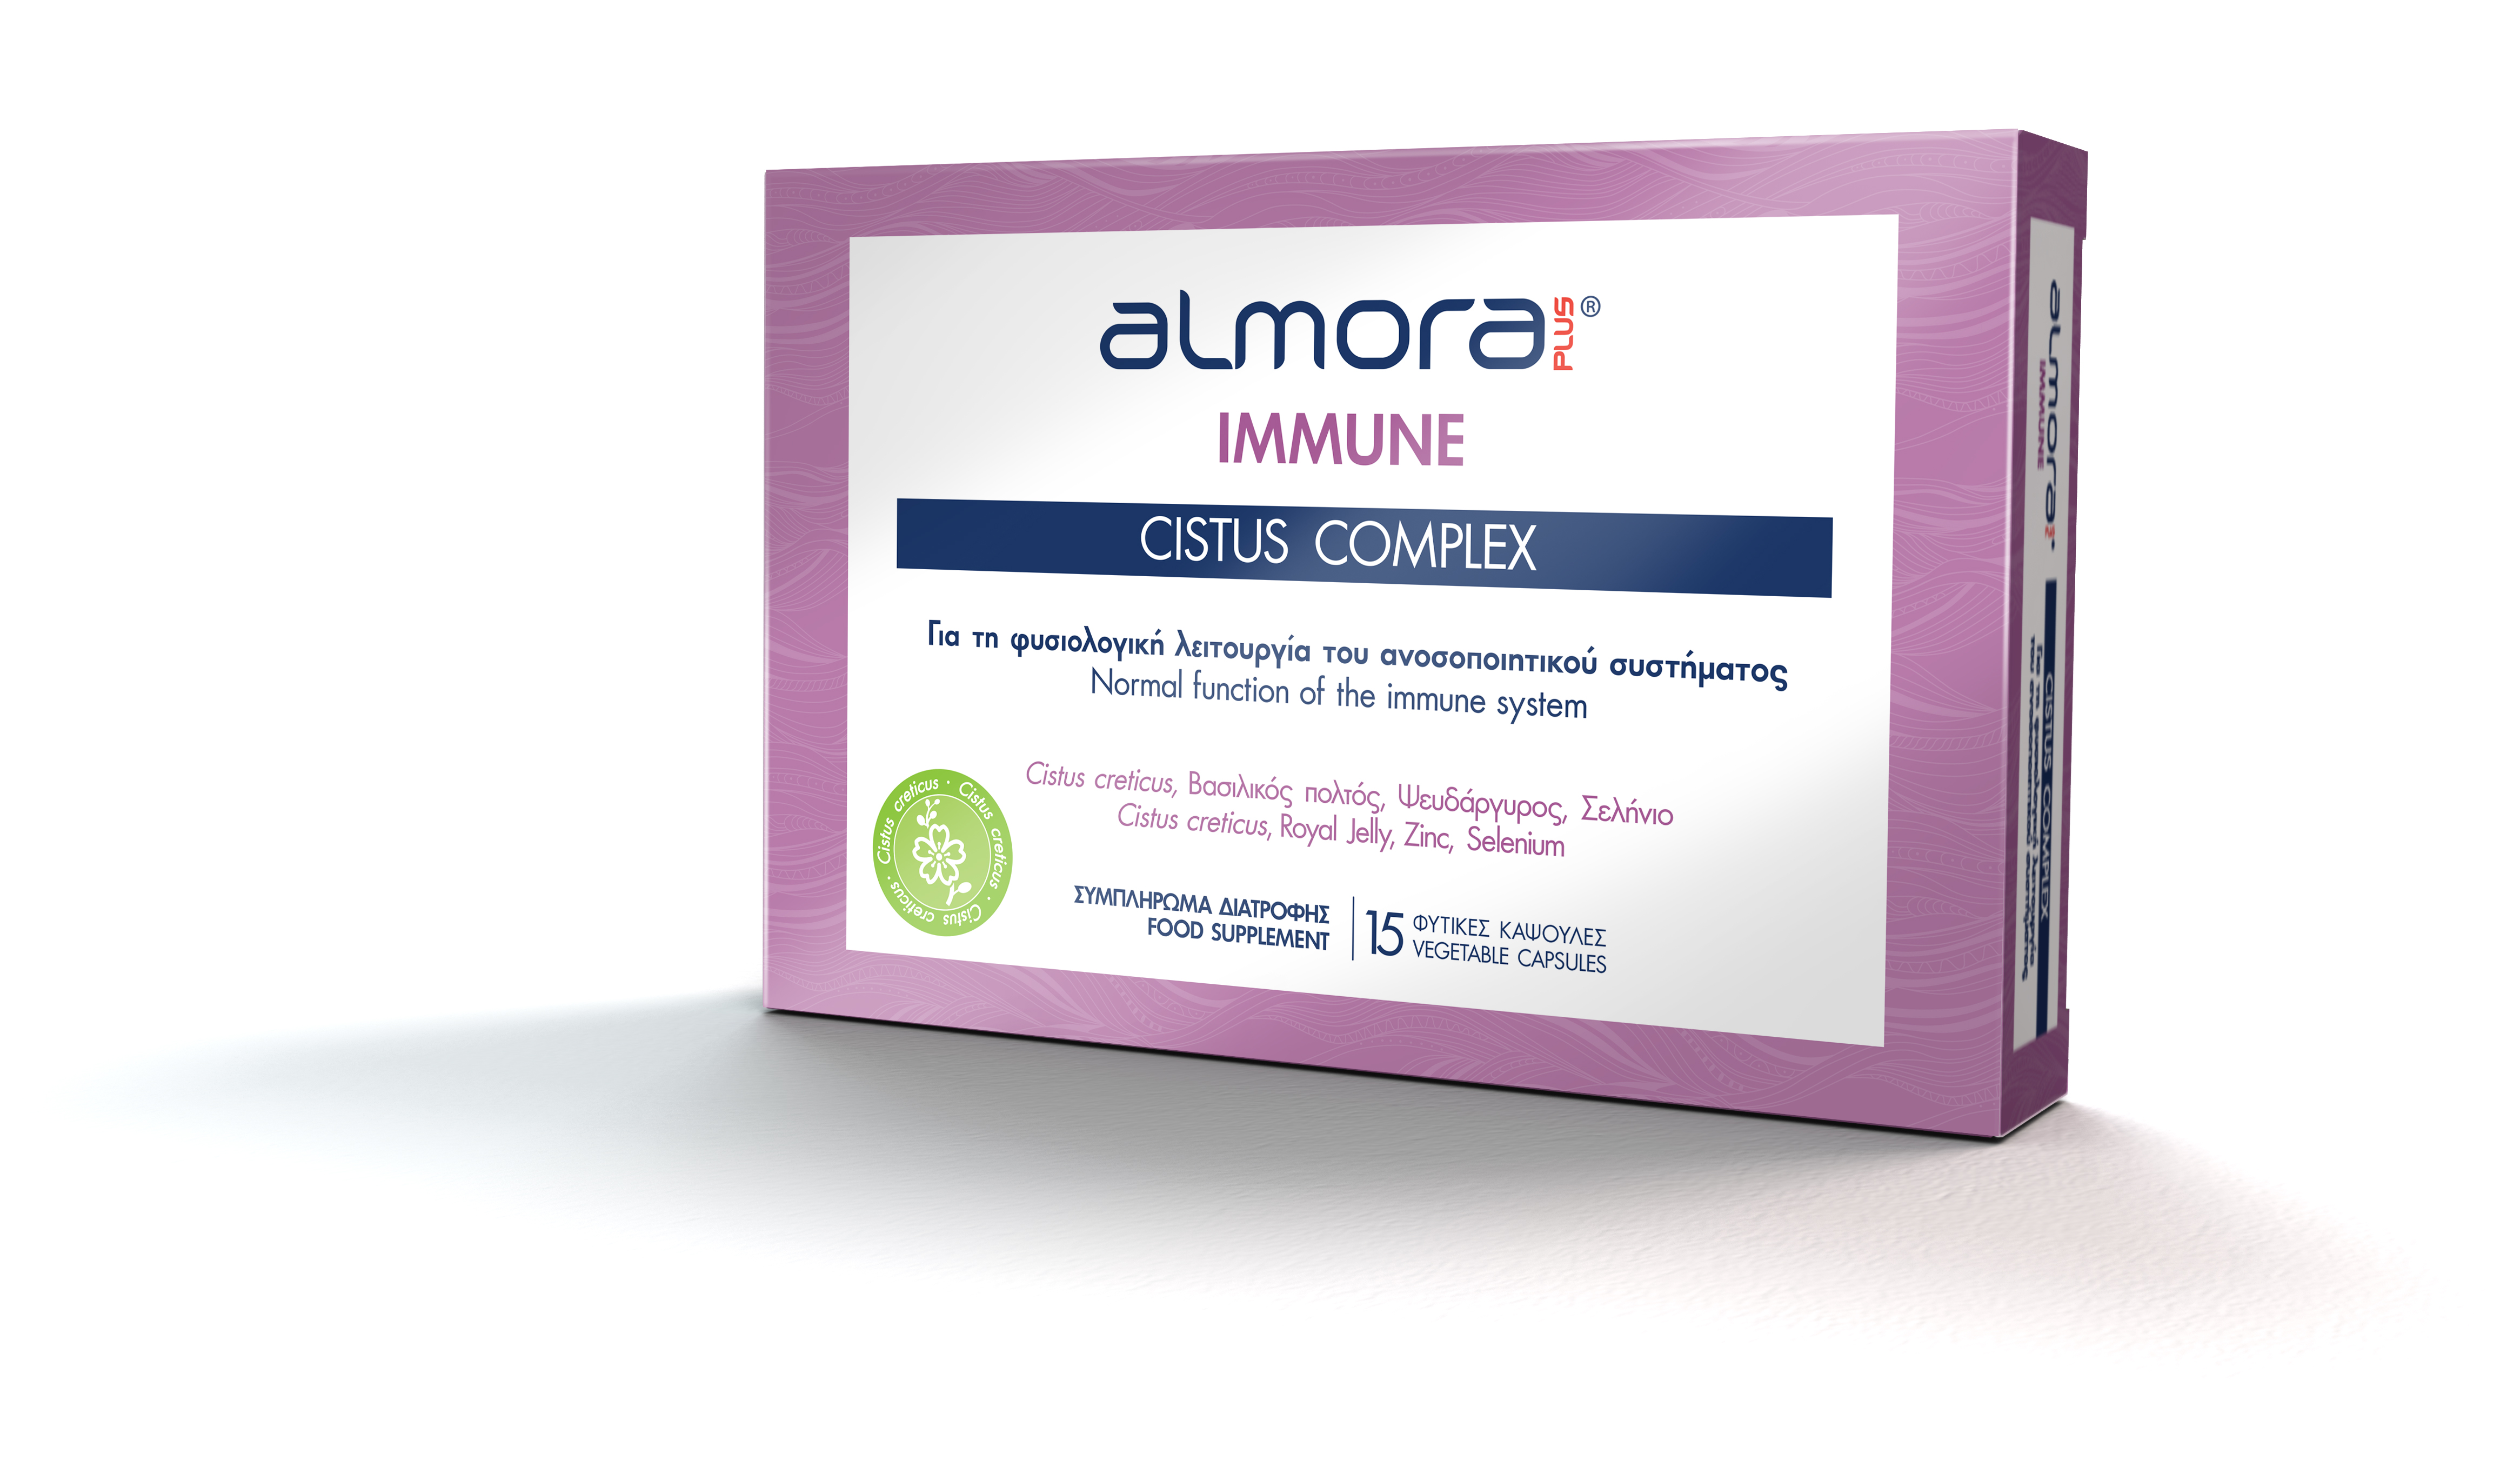 almora PLUS® IMMUNE CISTUS COMPLEX, ισχυρό ανοσοποιητικό σύστημα και θωράκιση του οργανισμού